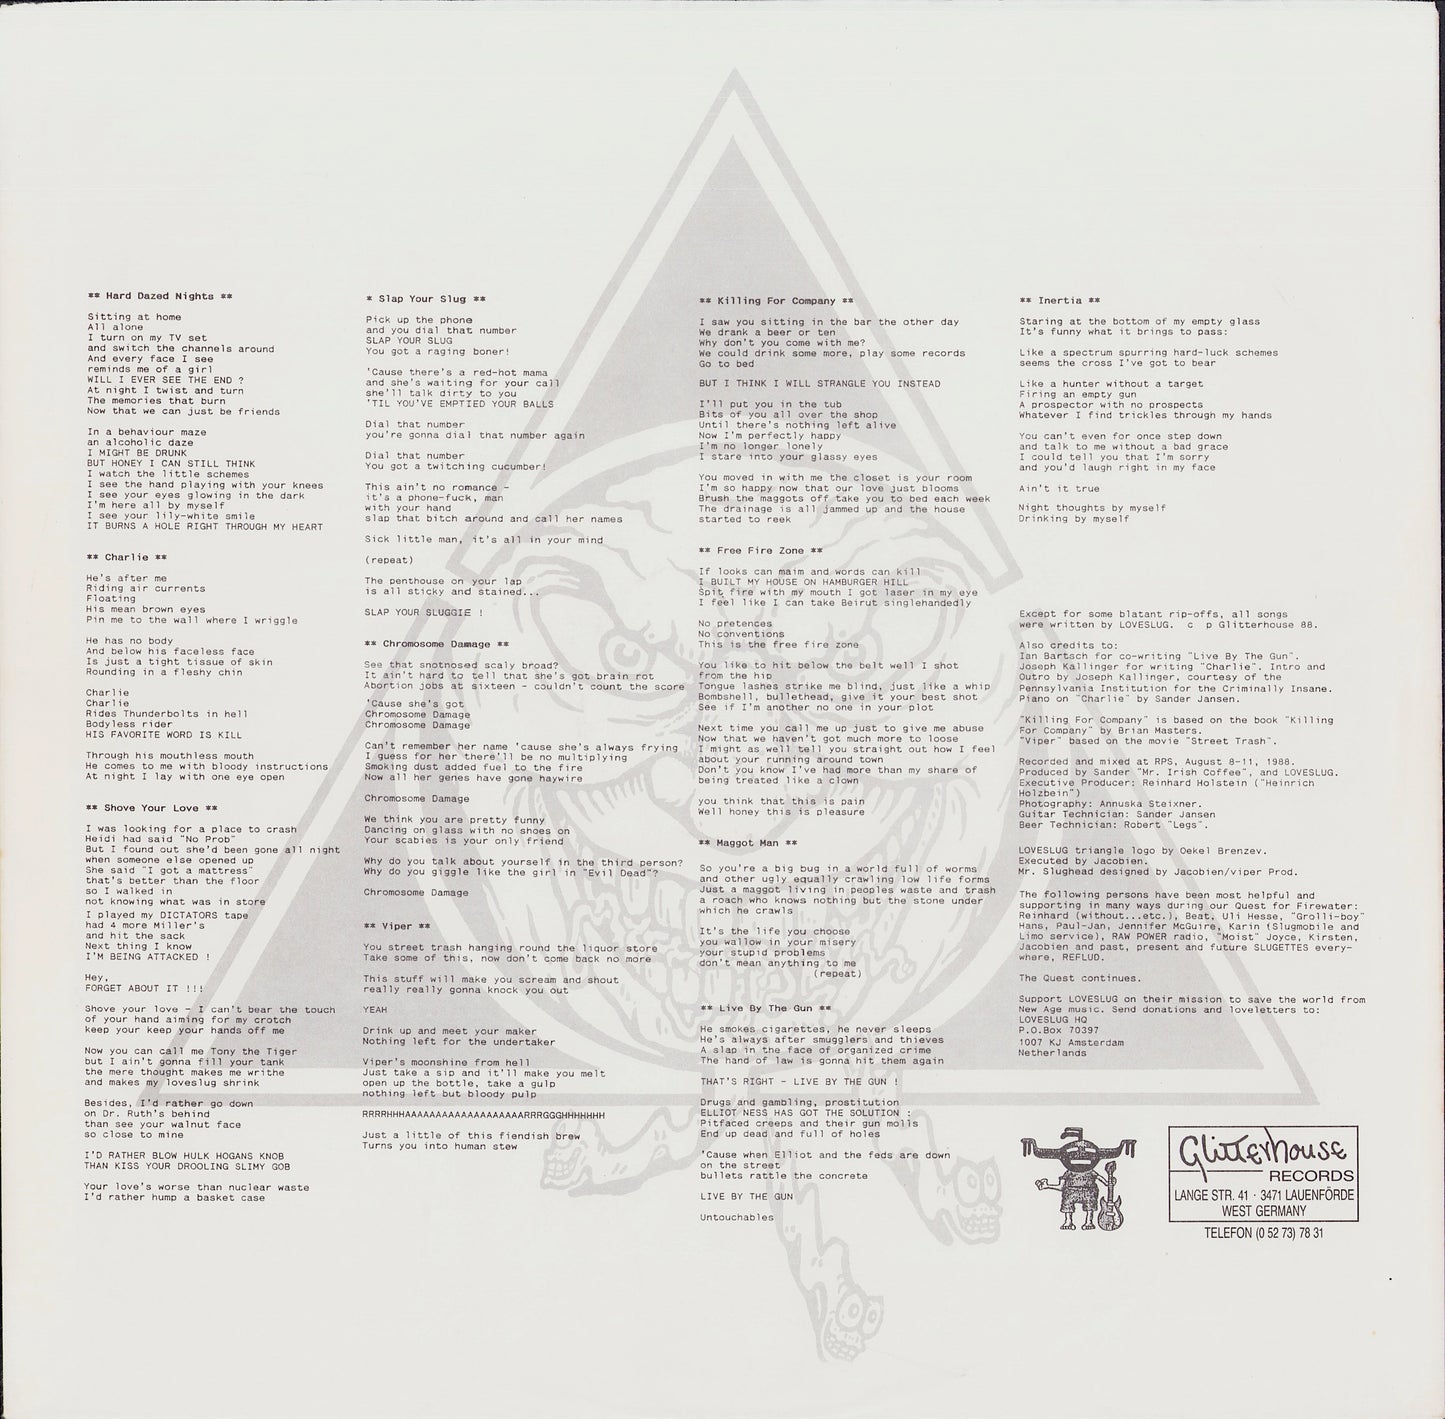 Loveslug - Slug 'Em All Vinyl LP